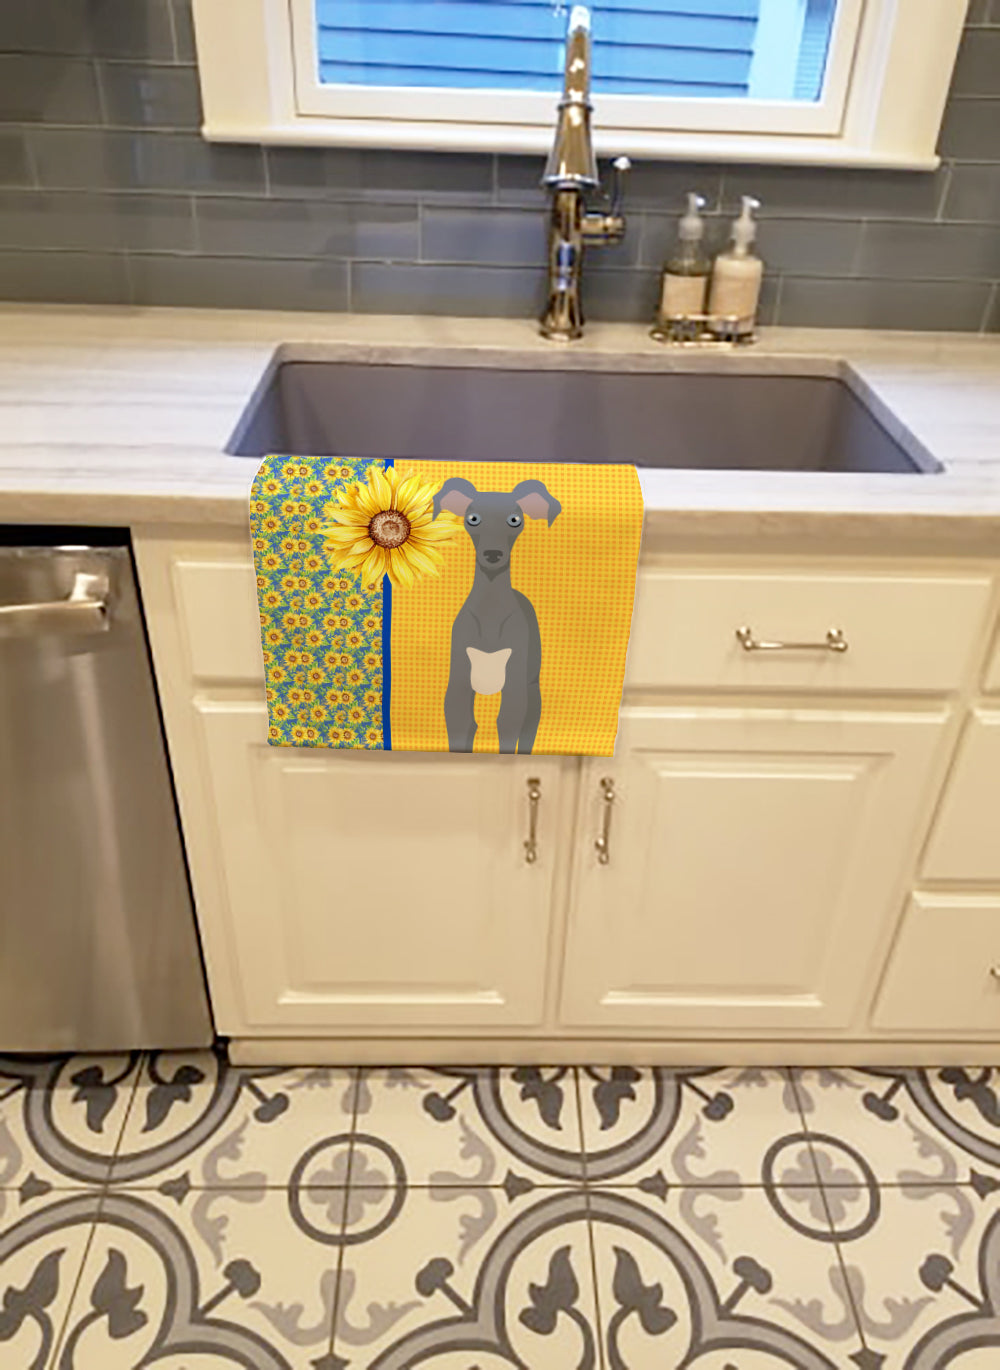 Buy this Summer Sunflowers Gray Italian Greyhound Kitchen Towel